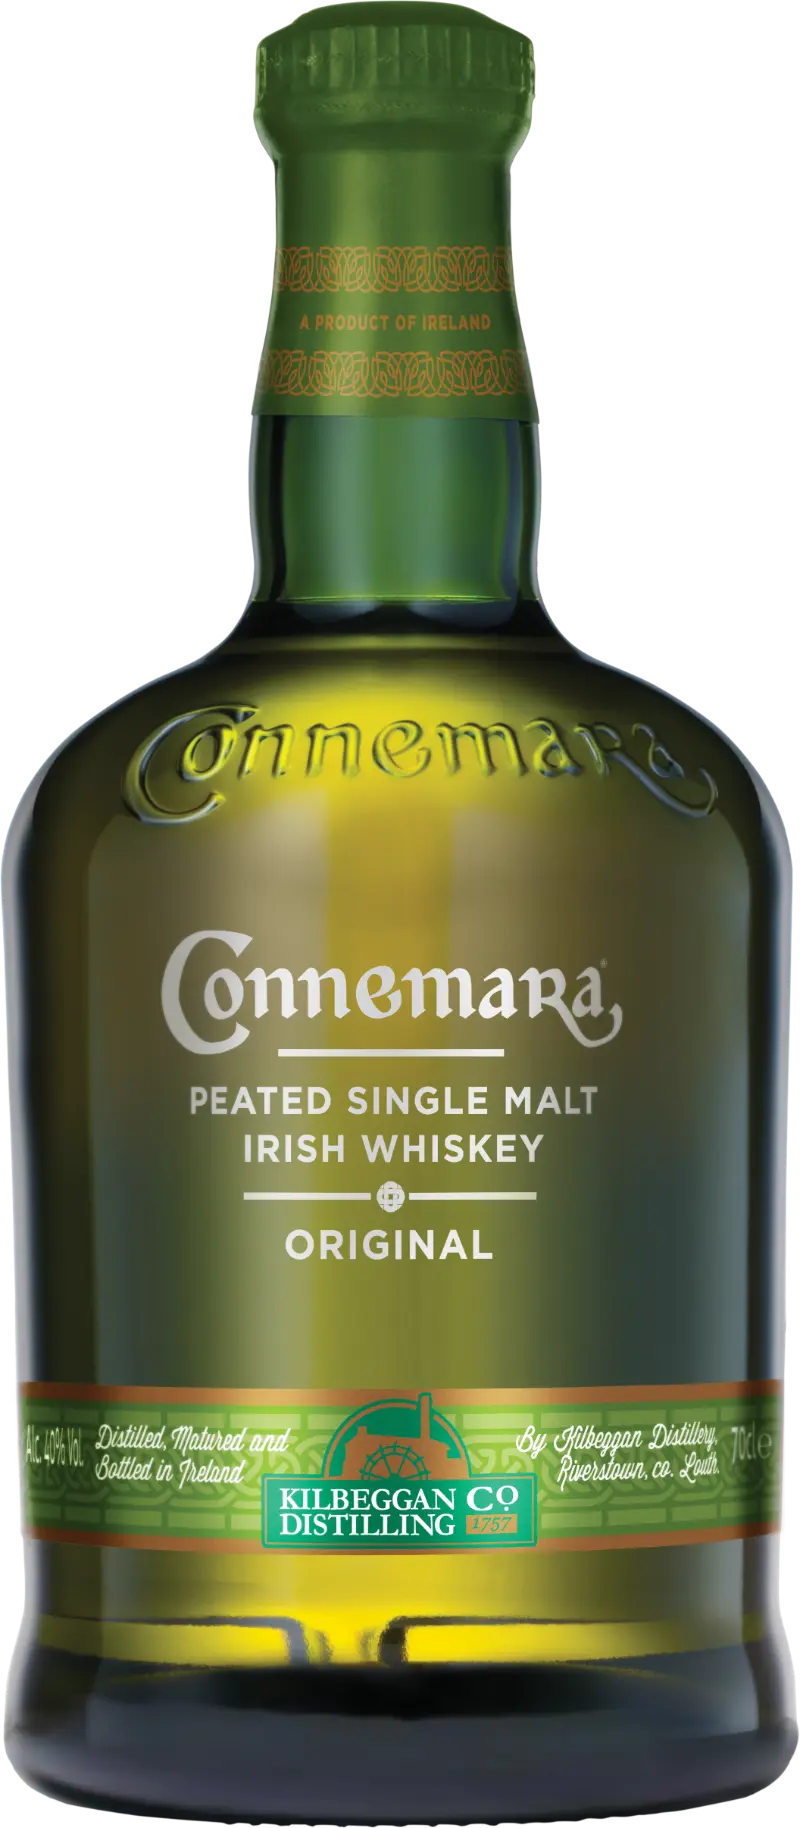 An image of a bottle of Connemara Original Peated Irish Single Malt Whiskey 700ml